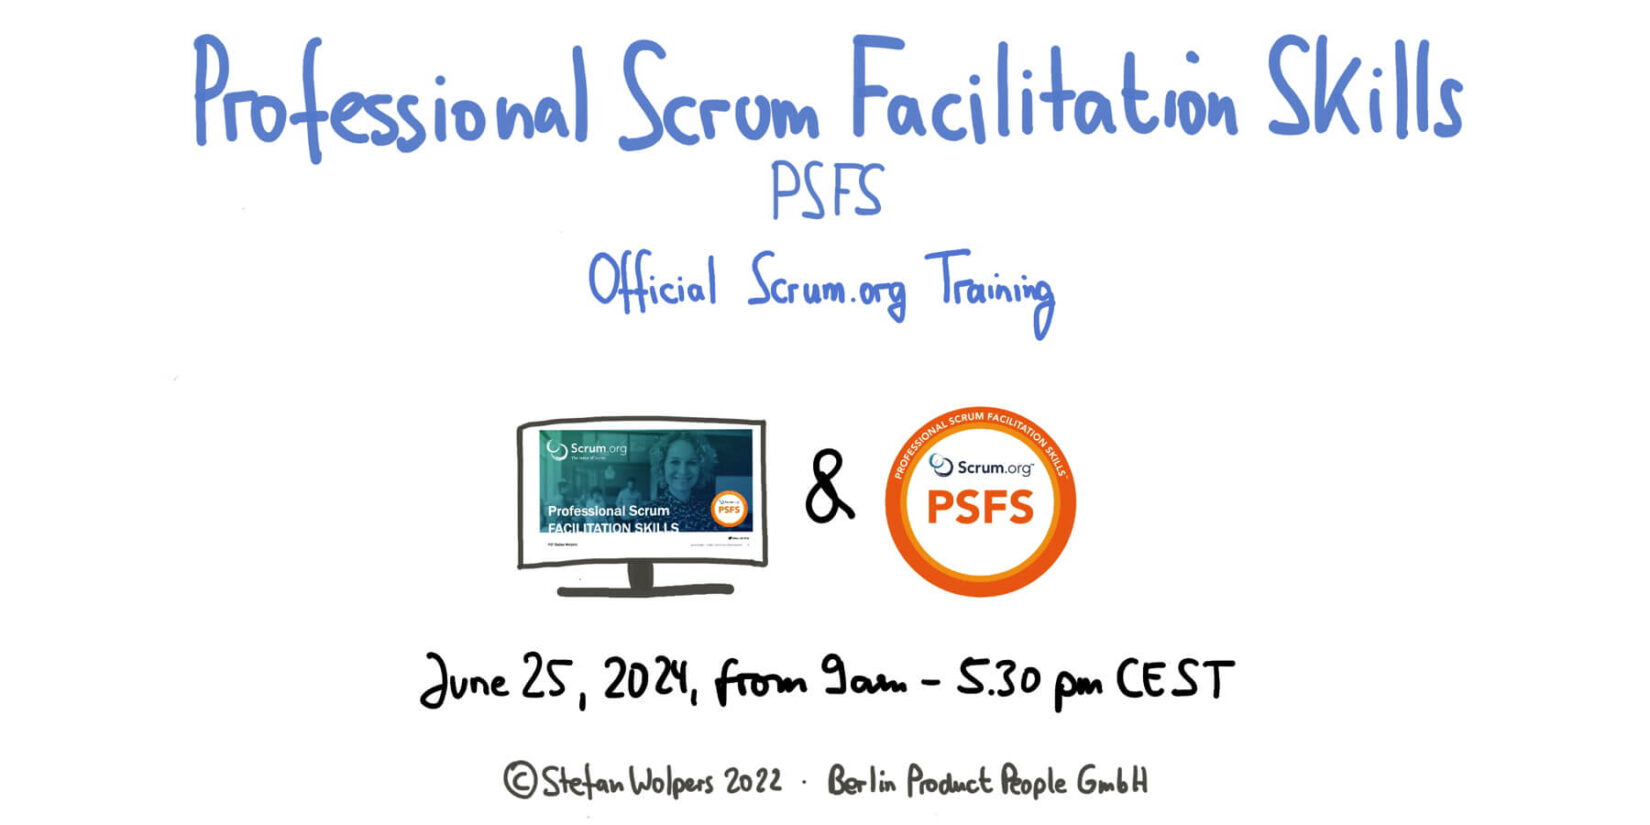 Professional Scrum Facilitation Skills Class w/ PSFS Certificate — June 25, 2024 — Berlin-Product-People.com